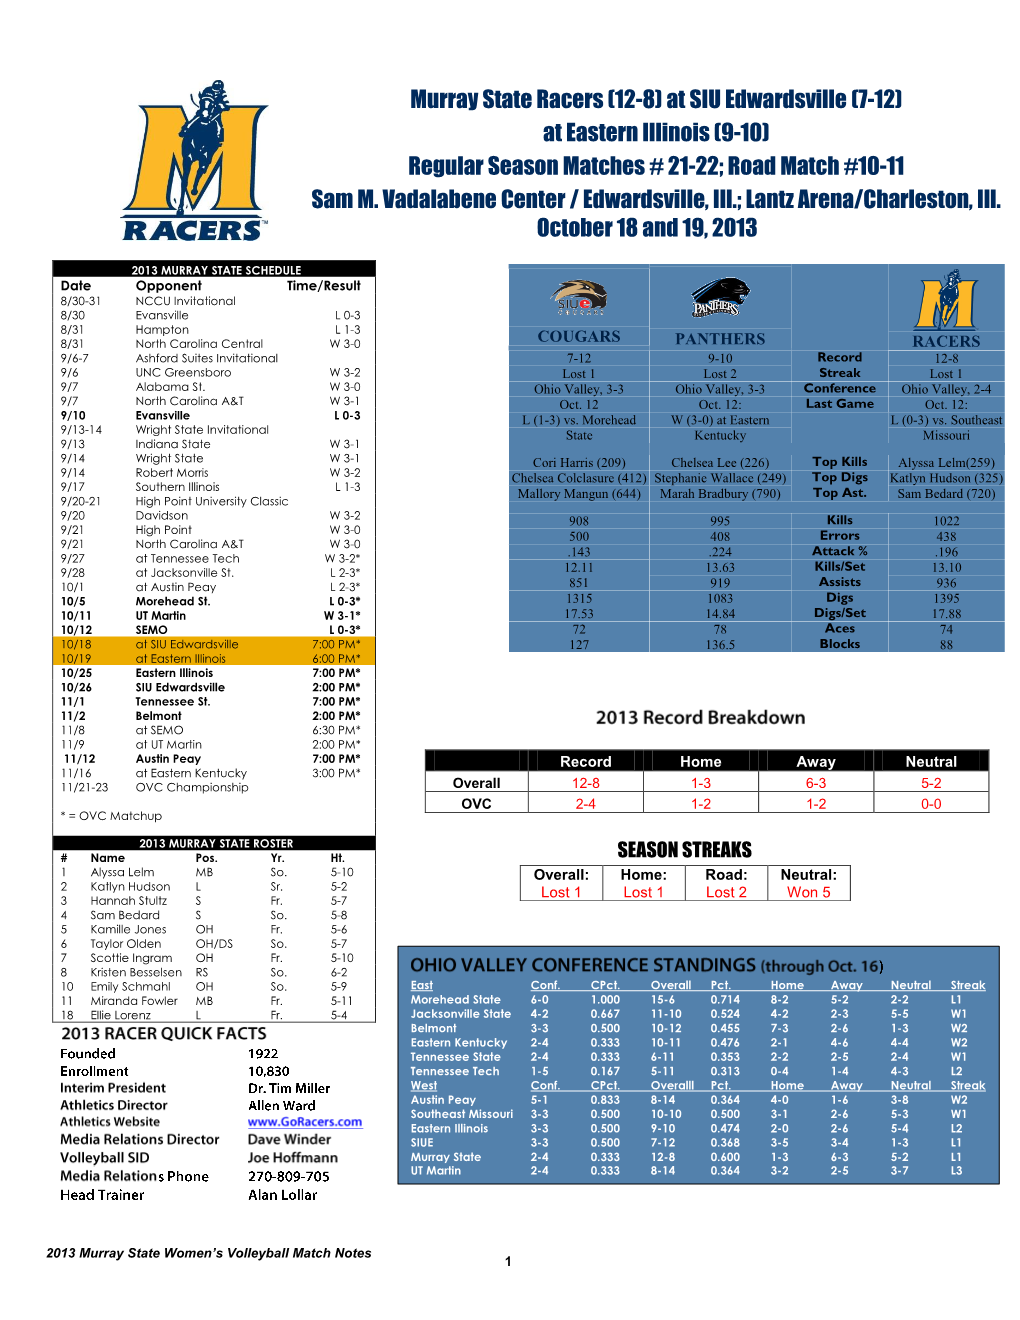 Murray State Racers (12-8) at SIU Edwardsville (7-12) at Eastern Illinois (9-10) Regular Season Matches # 21-22; Road Match #10-11 Sam M